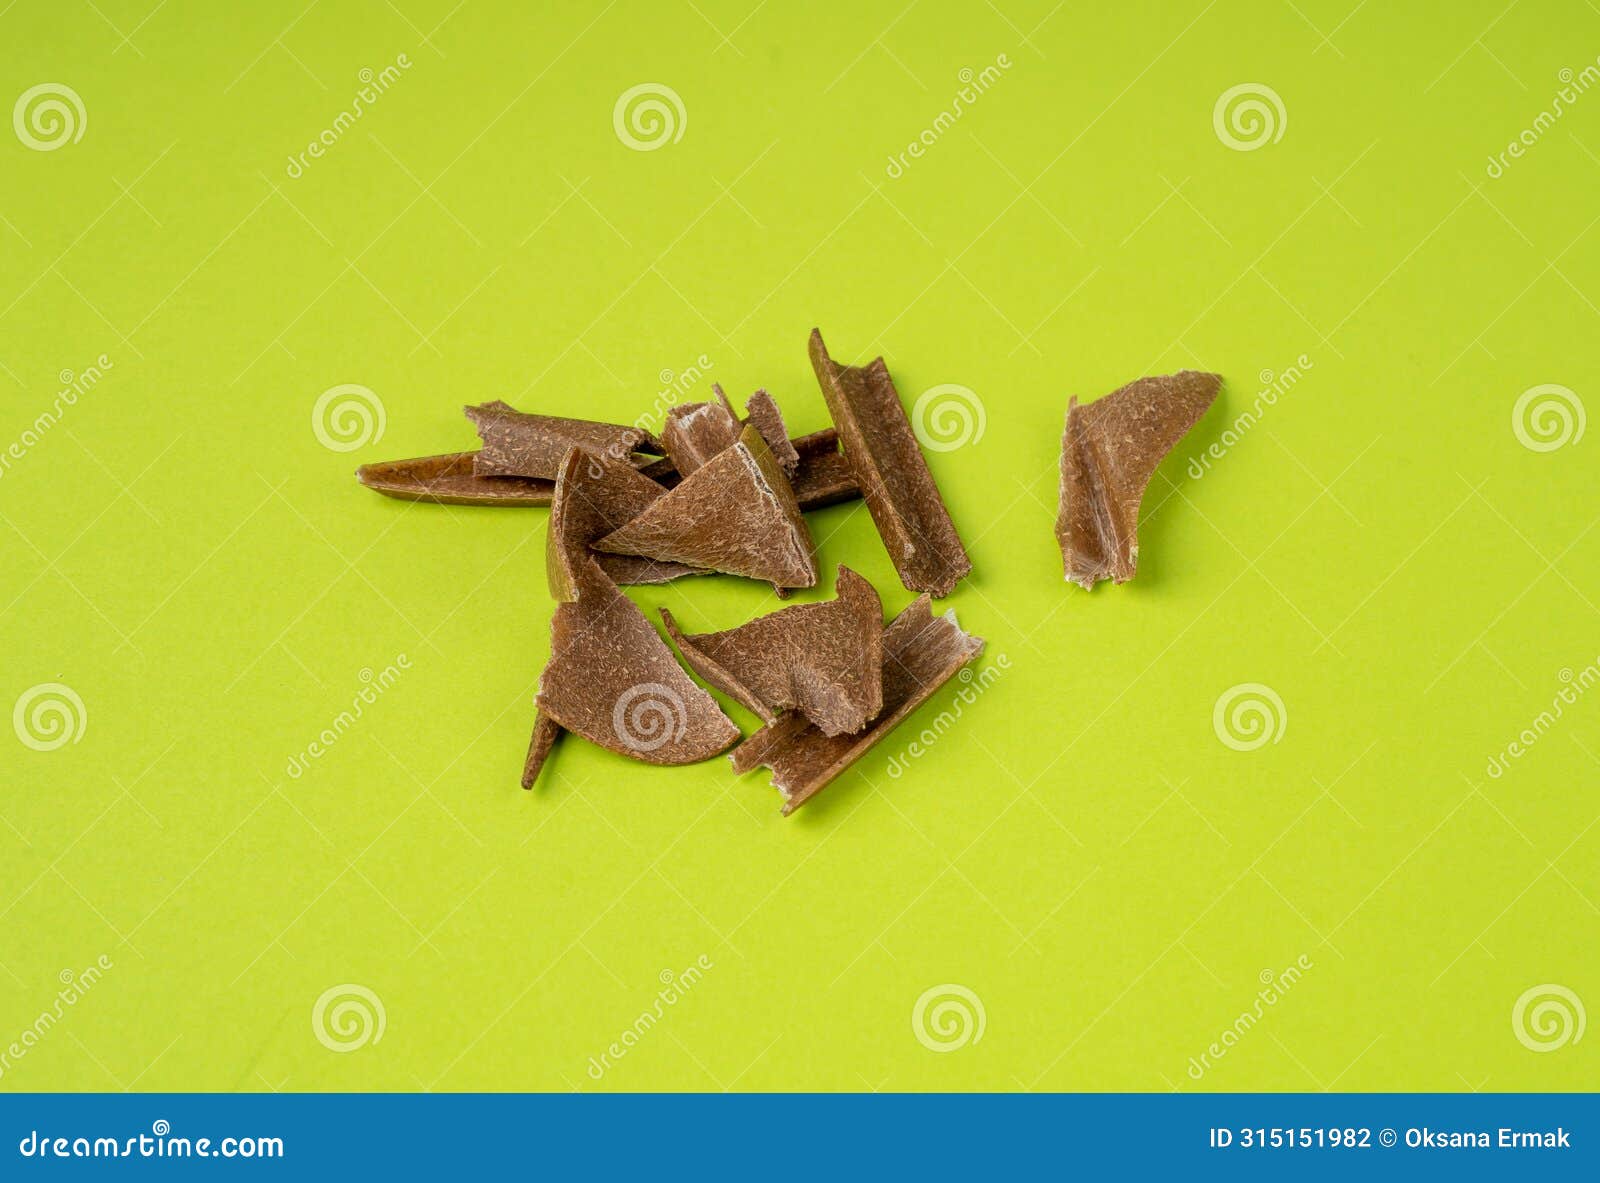 broken disposable brown spoon, wood fiber biodegradable cutlery pieces, eco fibres utensils